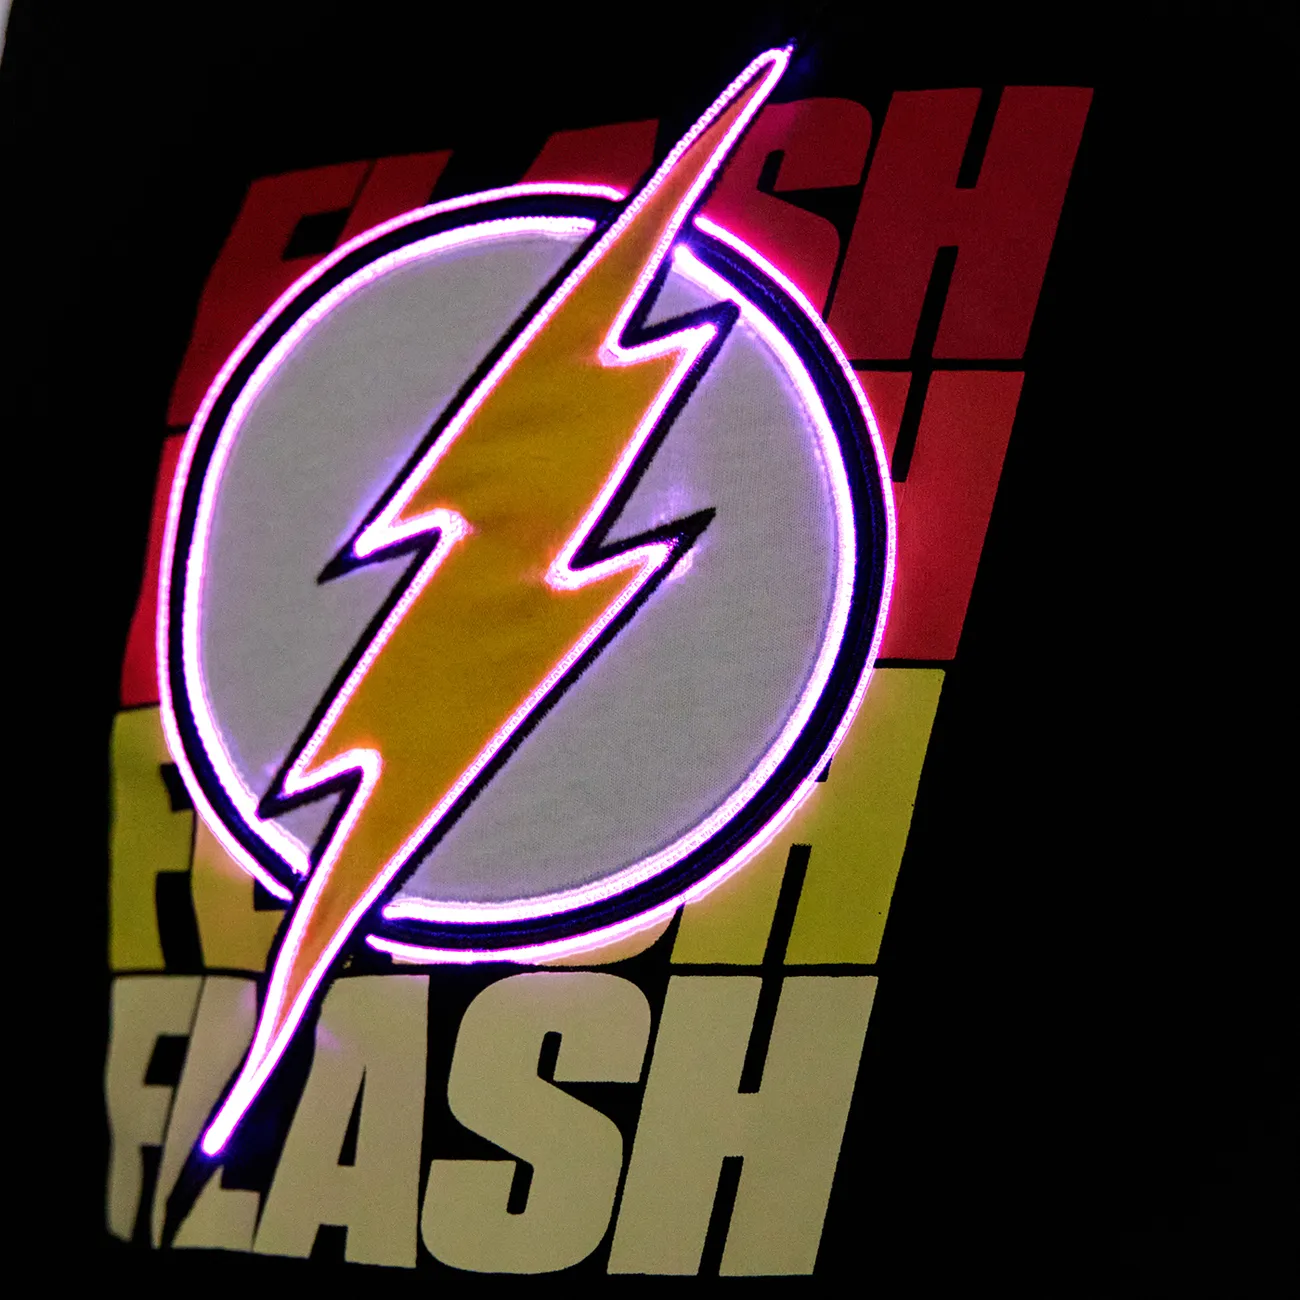 Go-Glow THE FLASH Illuminating Black Sweatshirt with Light Up The Flash Pattern Including Controller (Battery Inside) Black big image 1